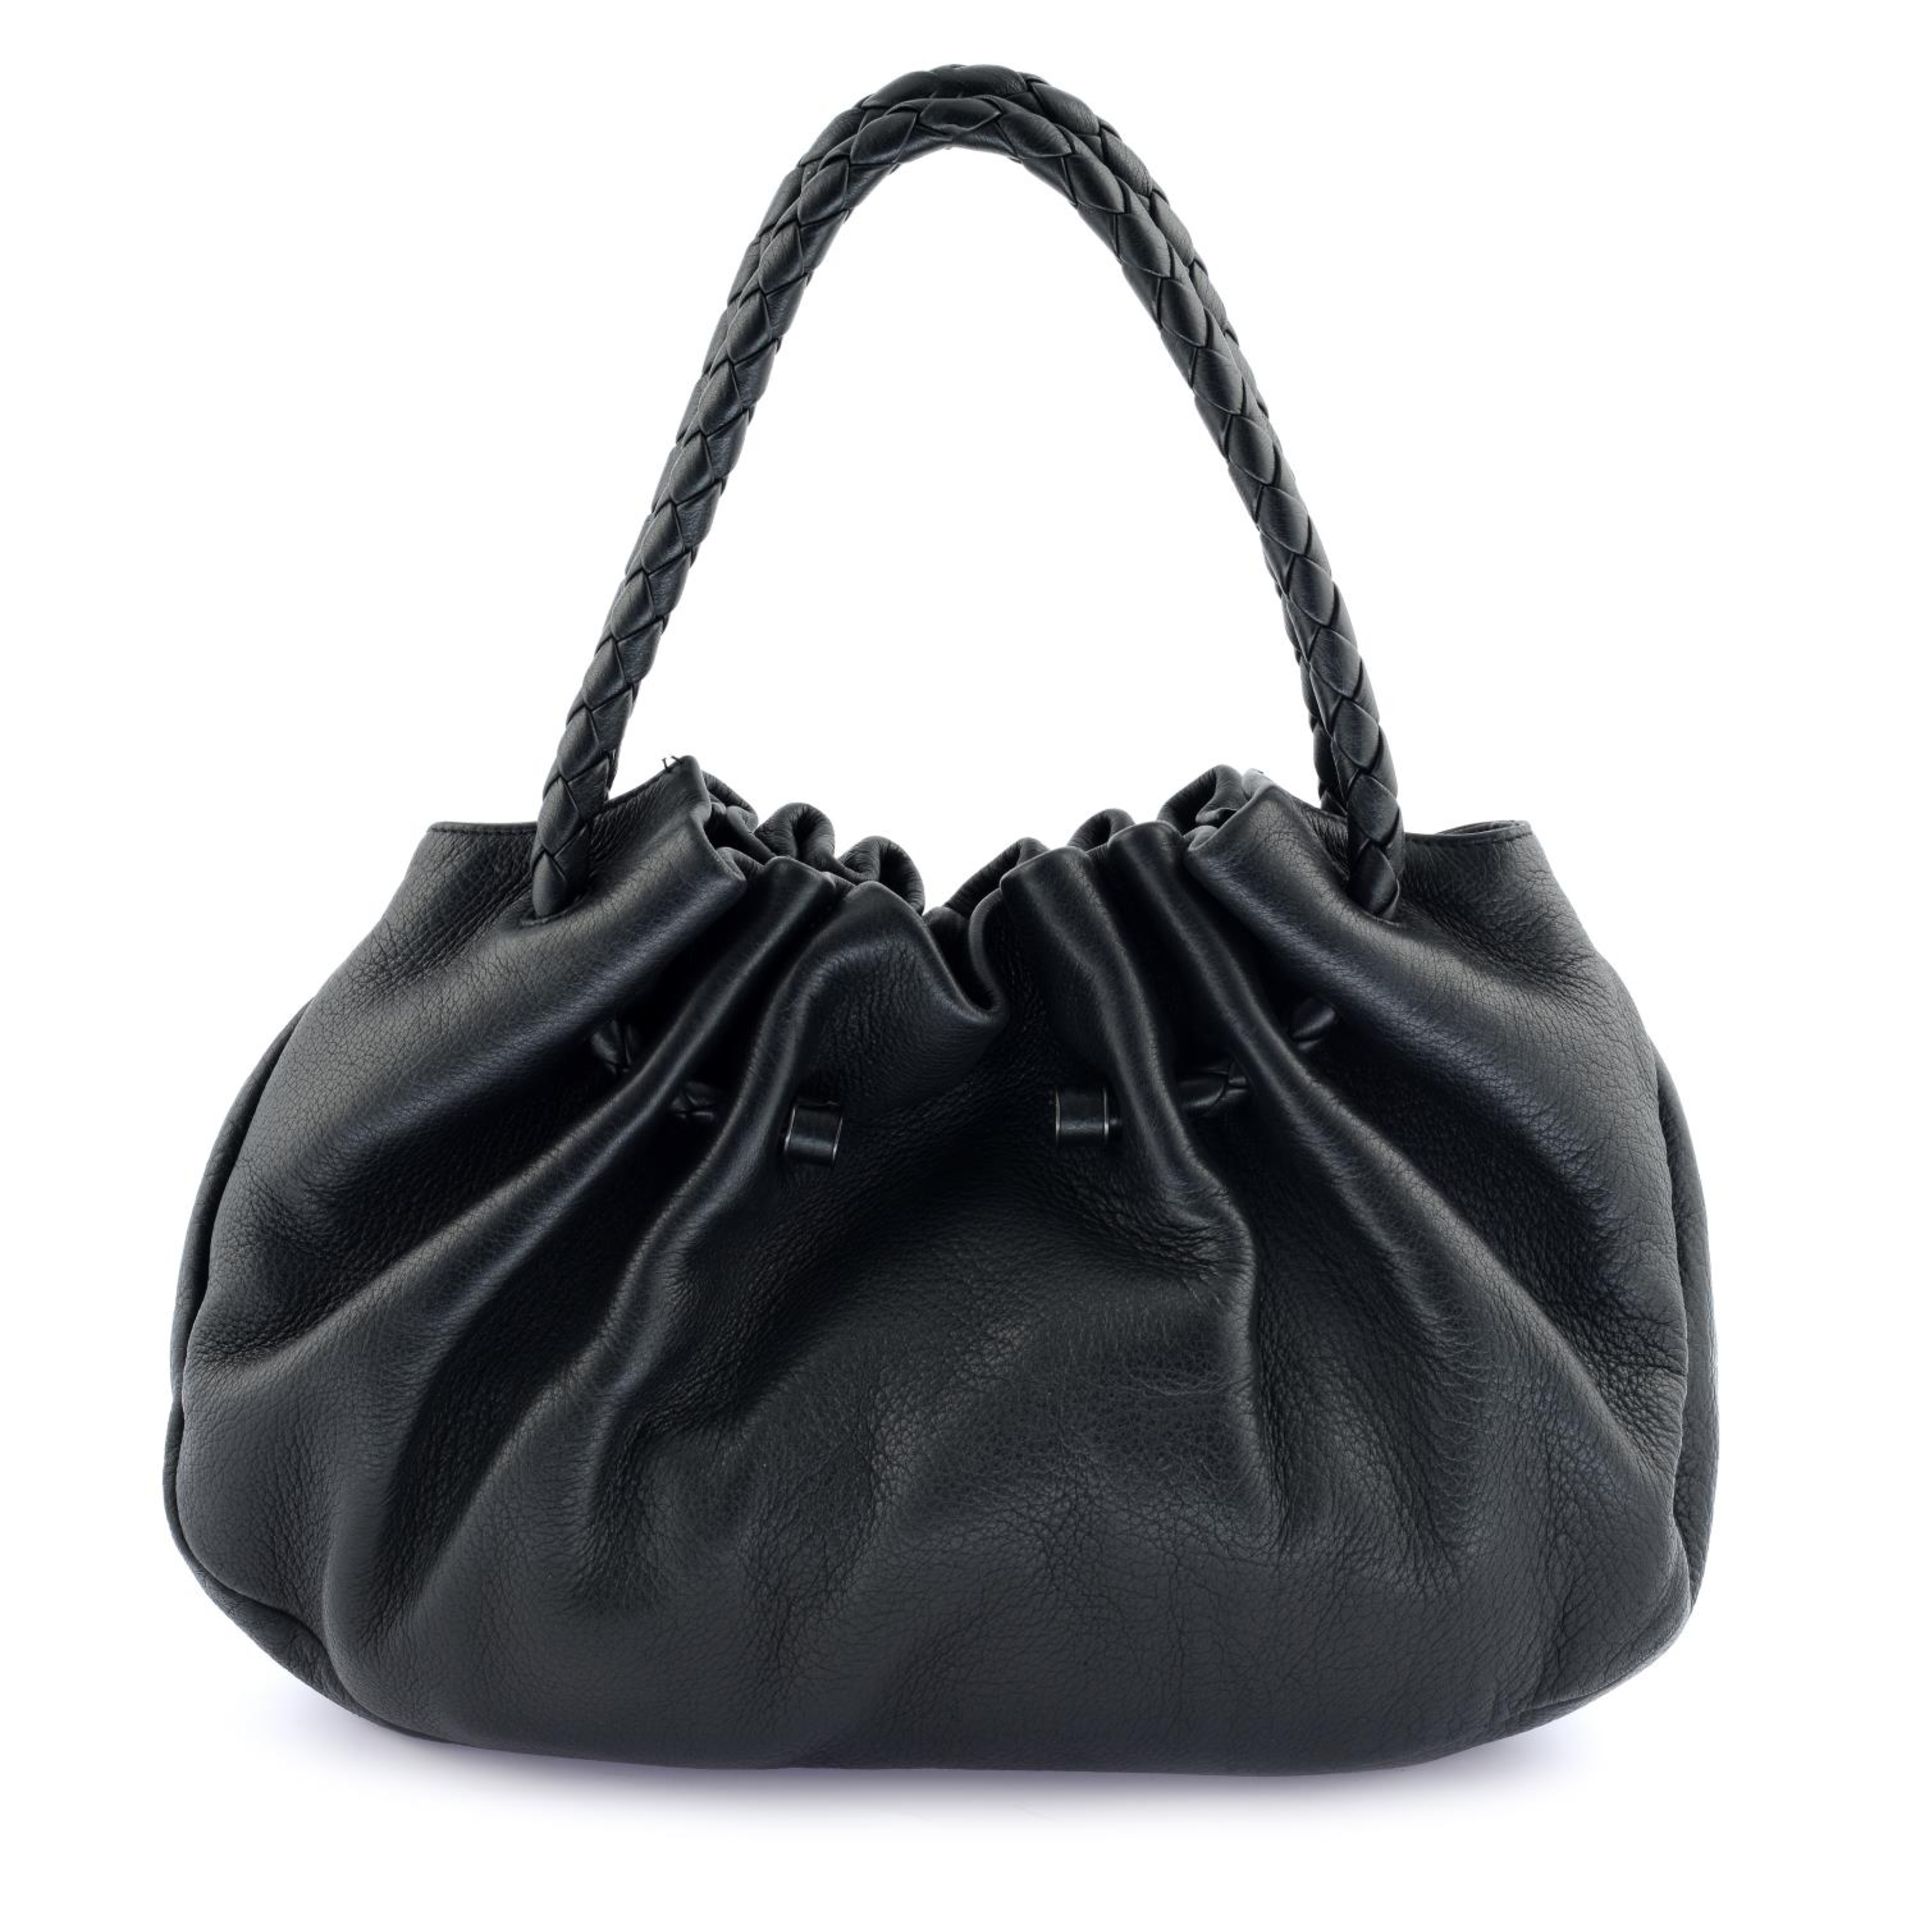 BOTTEGA VENETA - a black leather handbag.